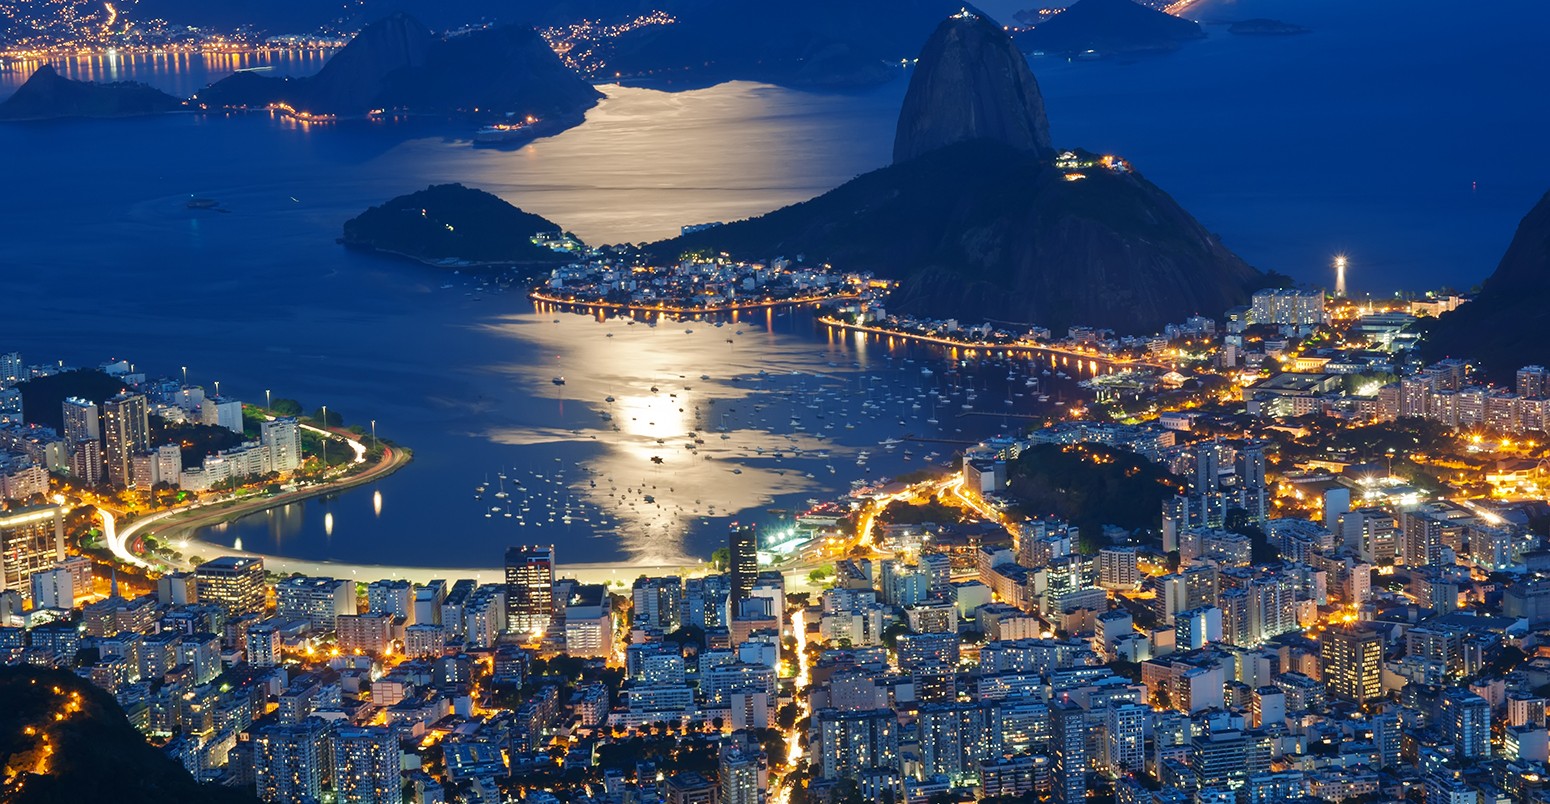 Night view of Sugar Loaf mountain and Botafogo in Rio de Janeiro.